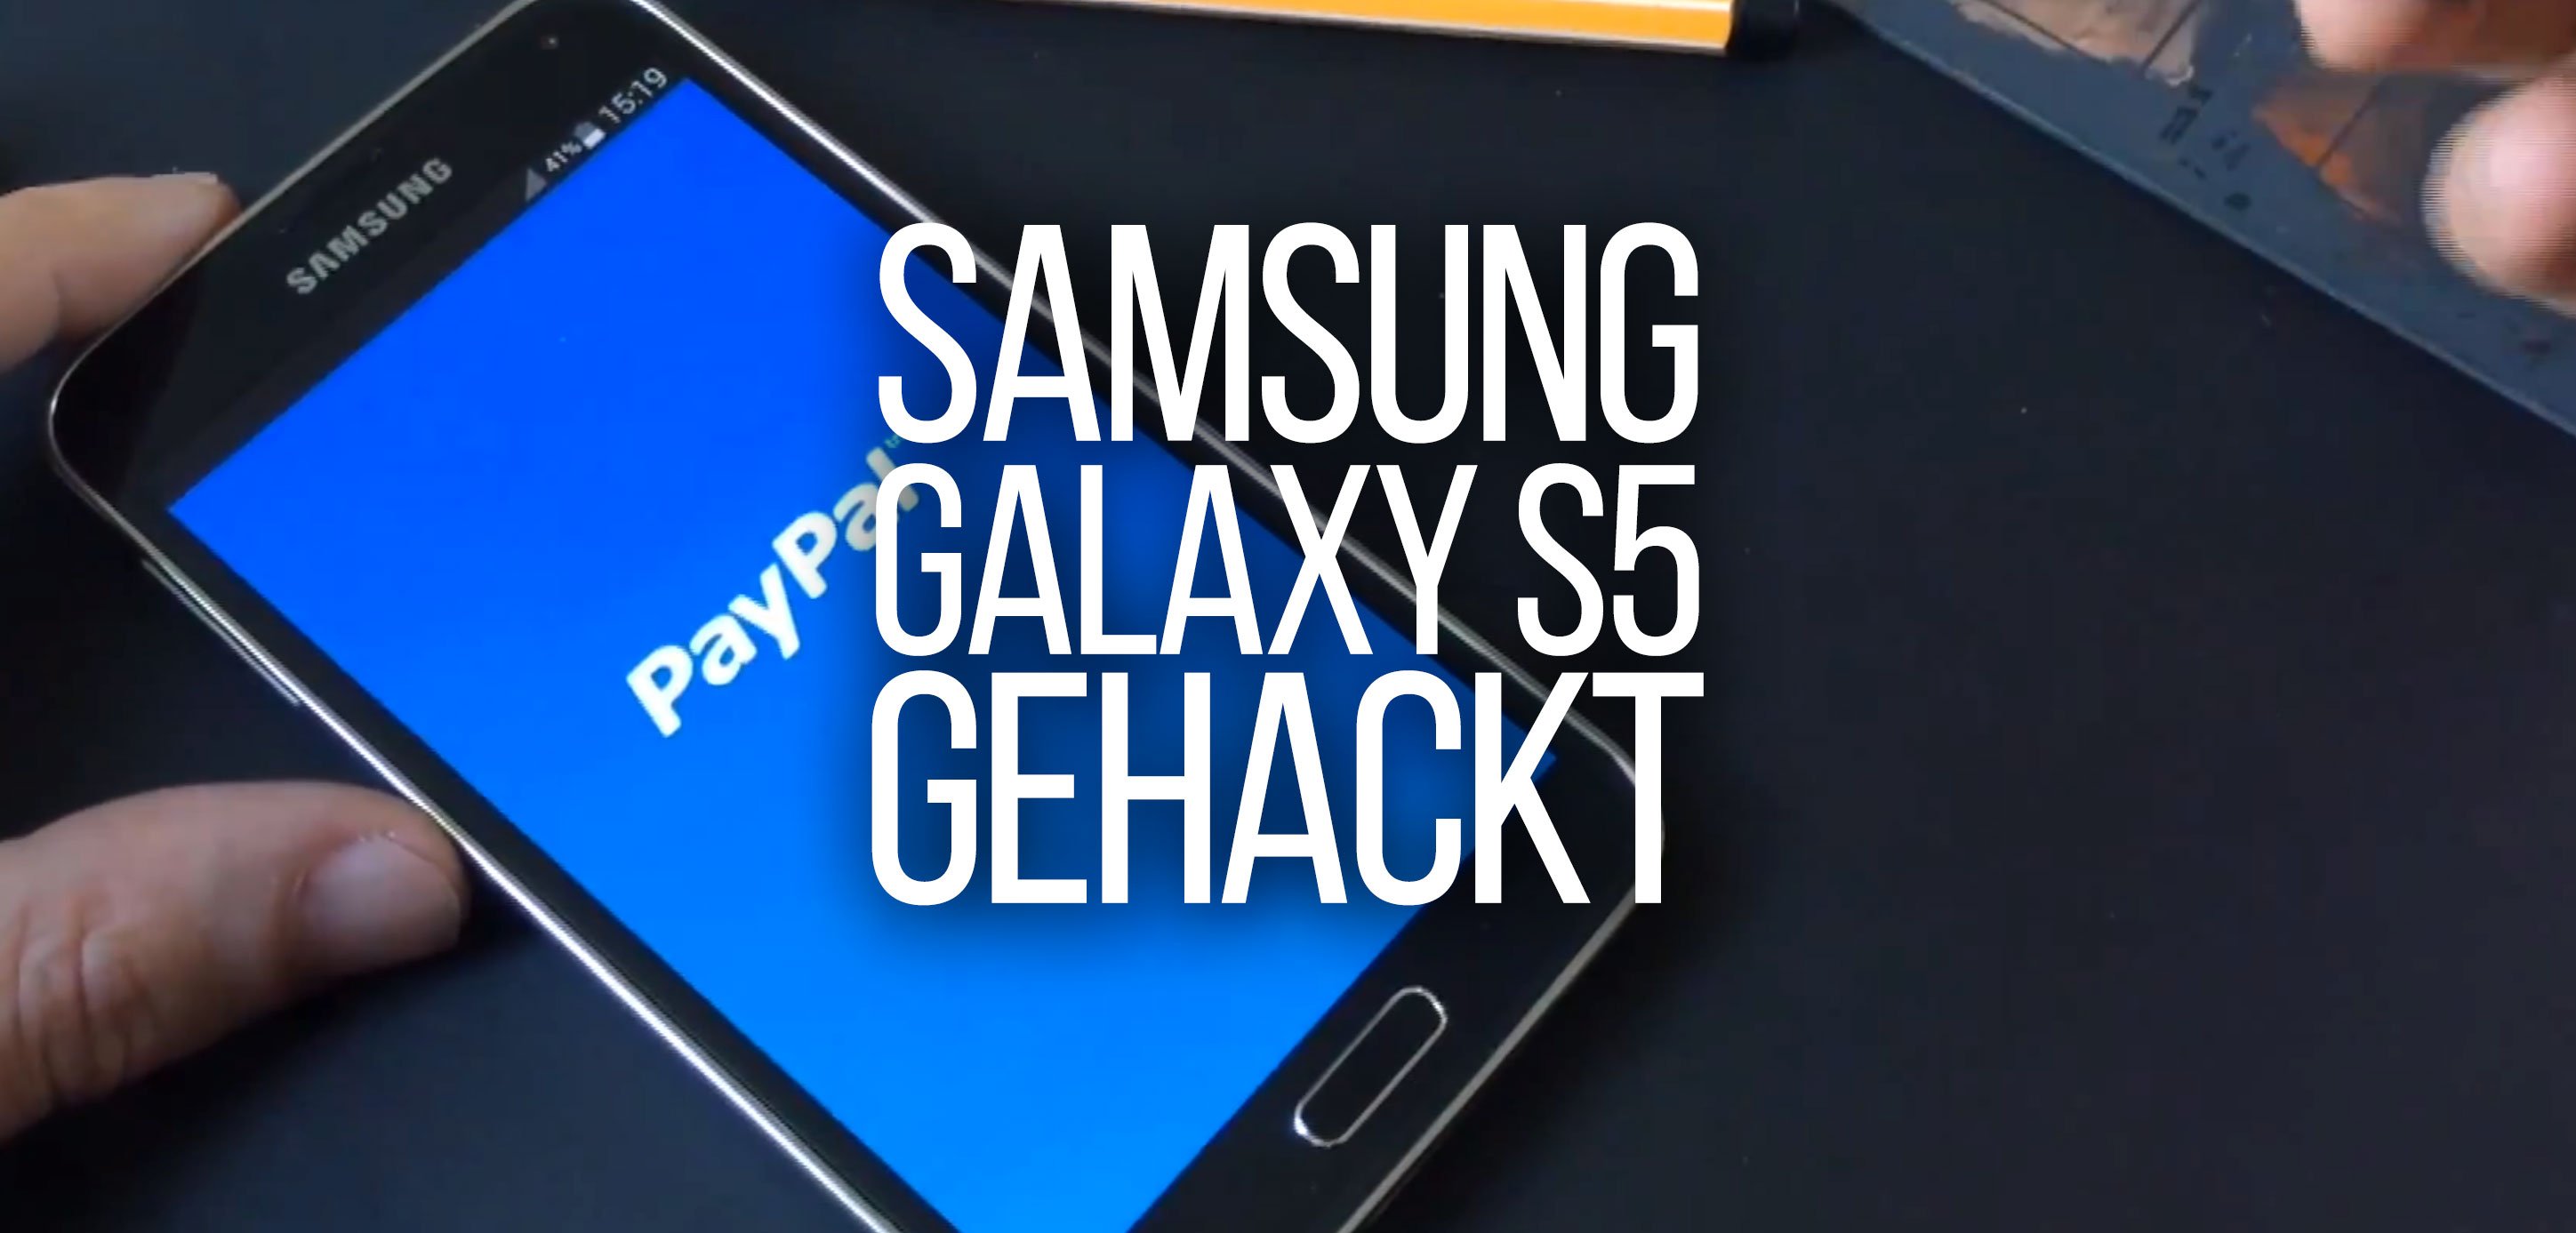 Samsung Galaxy S5 gehackt: iPhone 5s Touch ID sicherer! 1